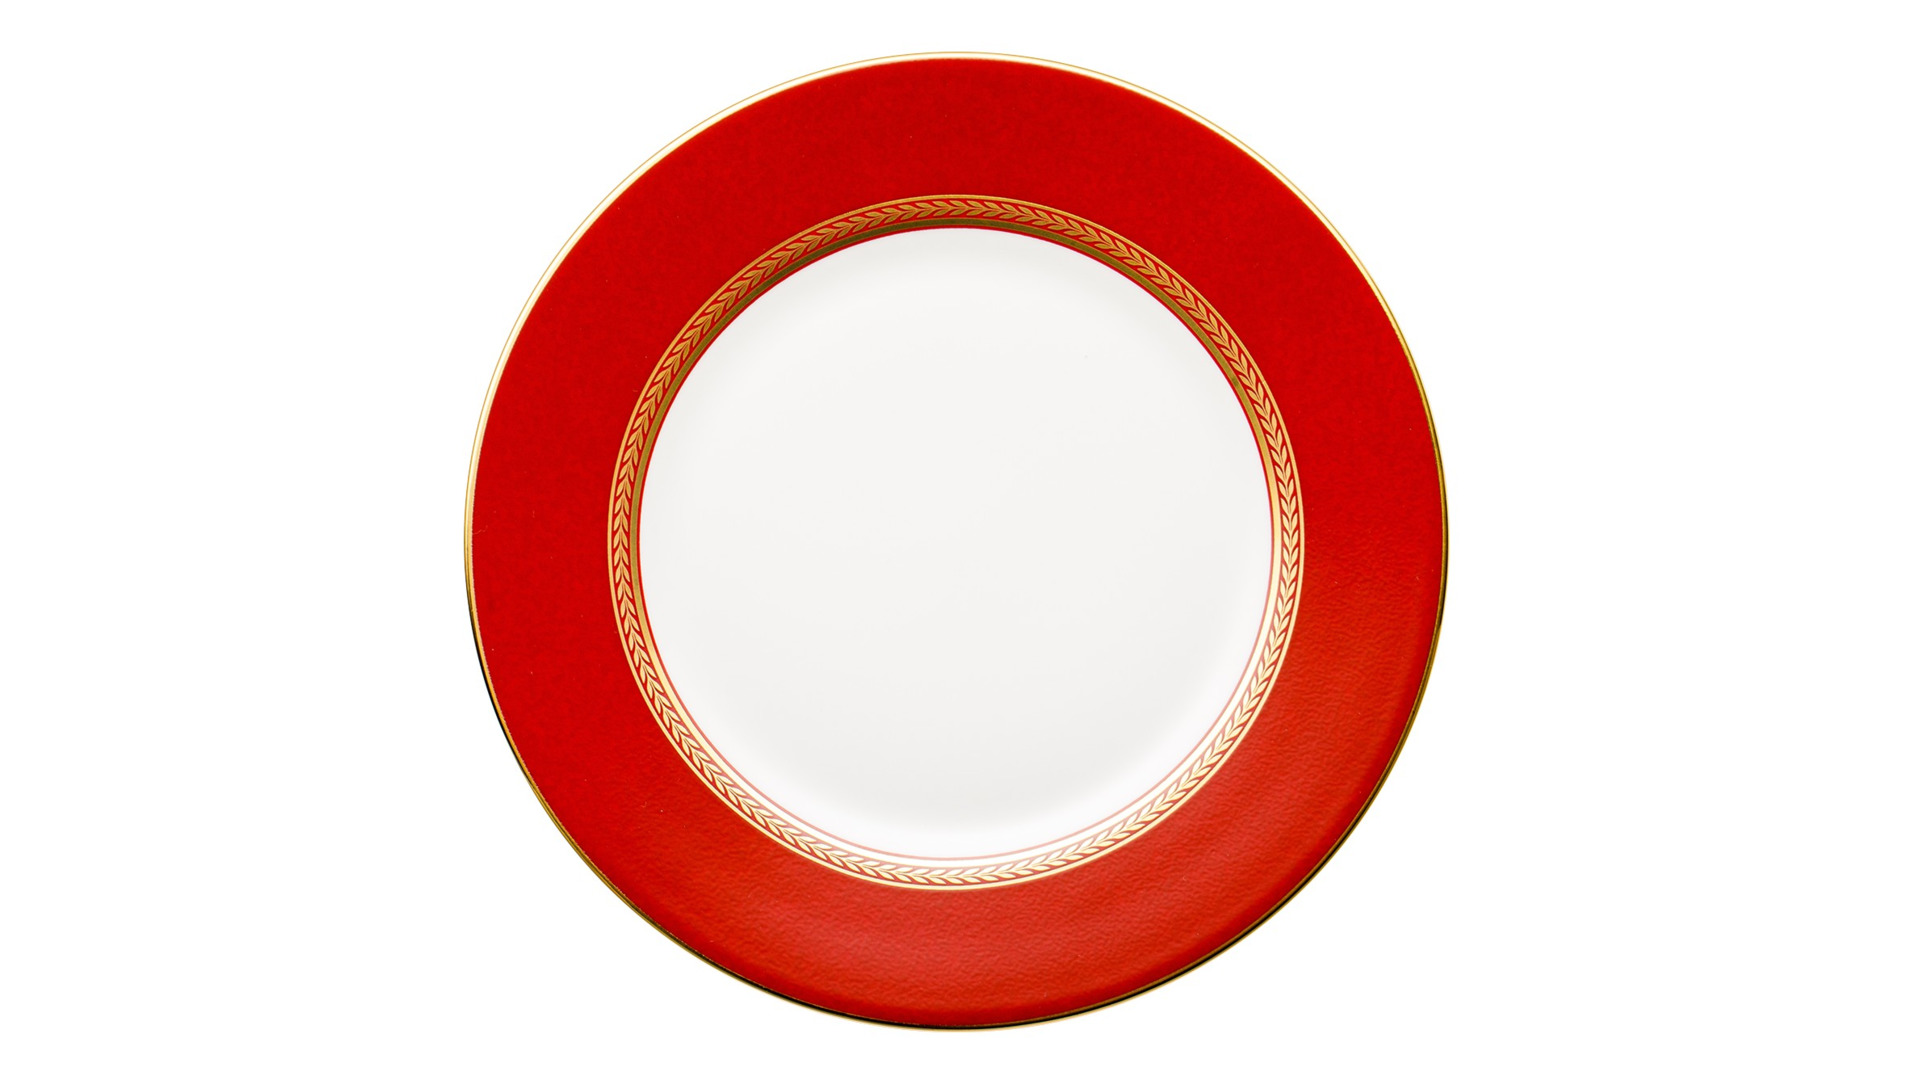 Тарелка закусочная Wedgwood Ренессанс 20 см, фарфор, красная